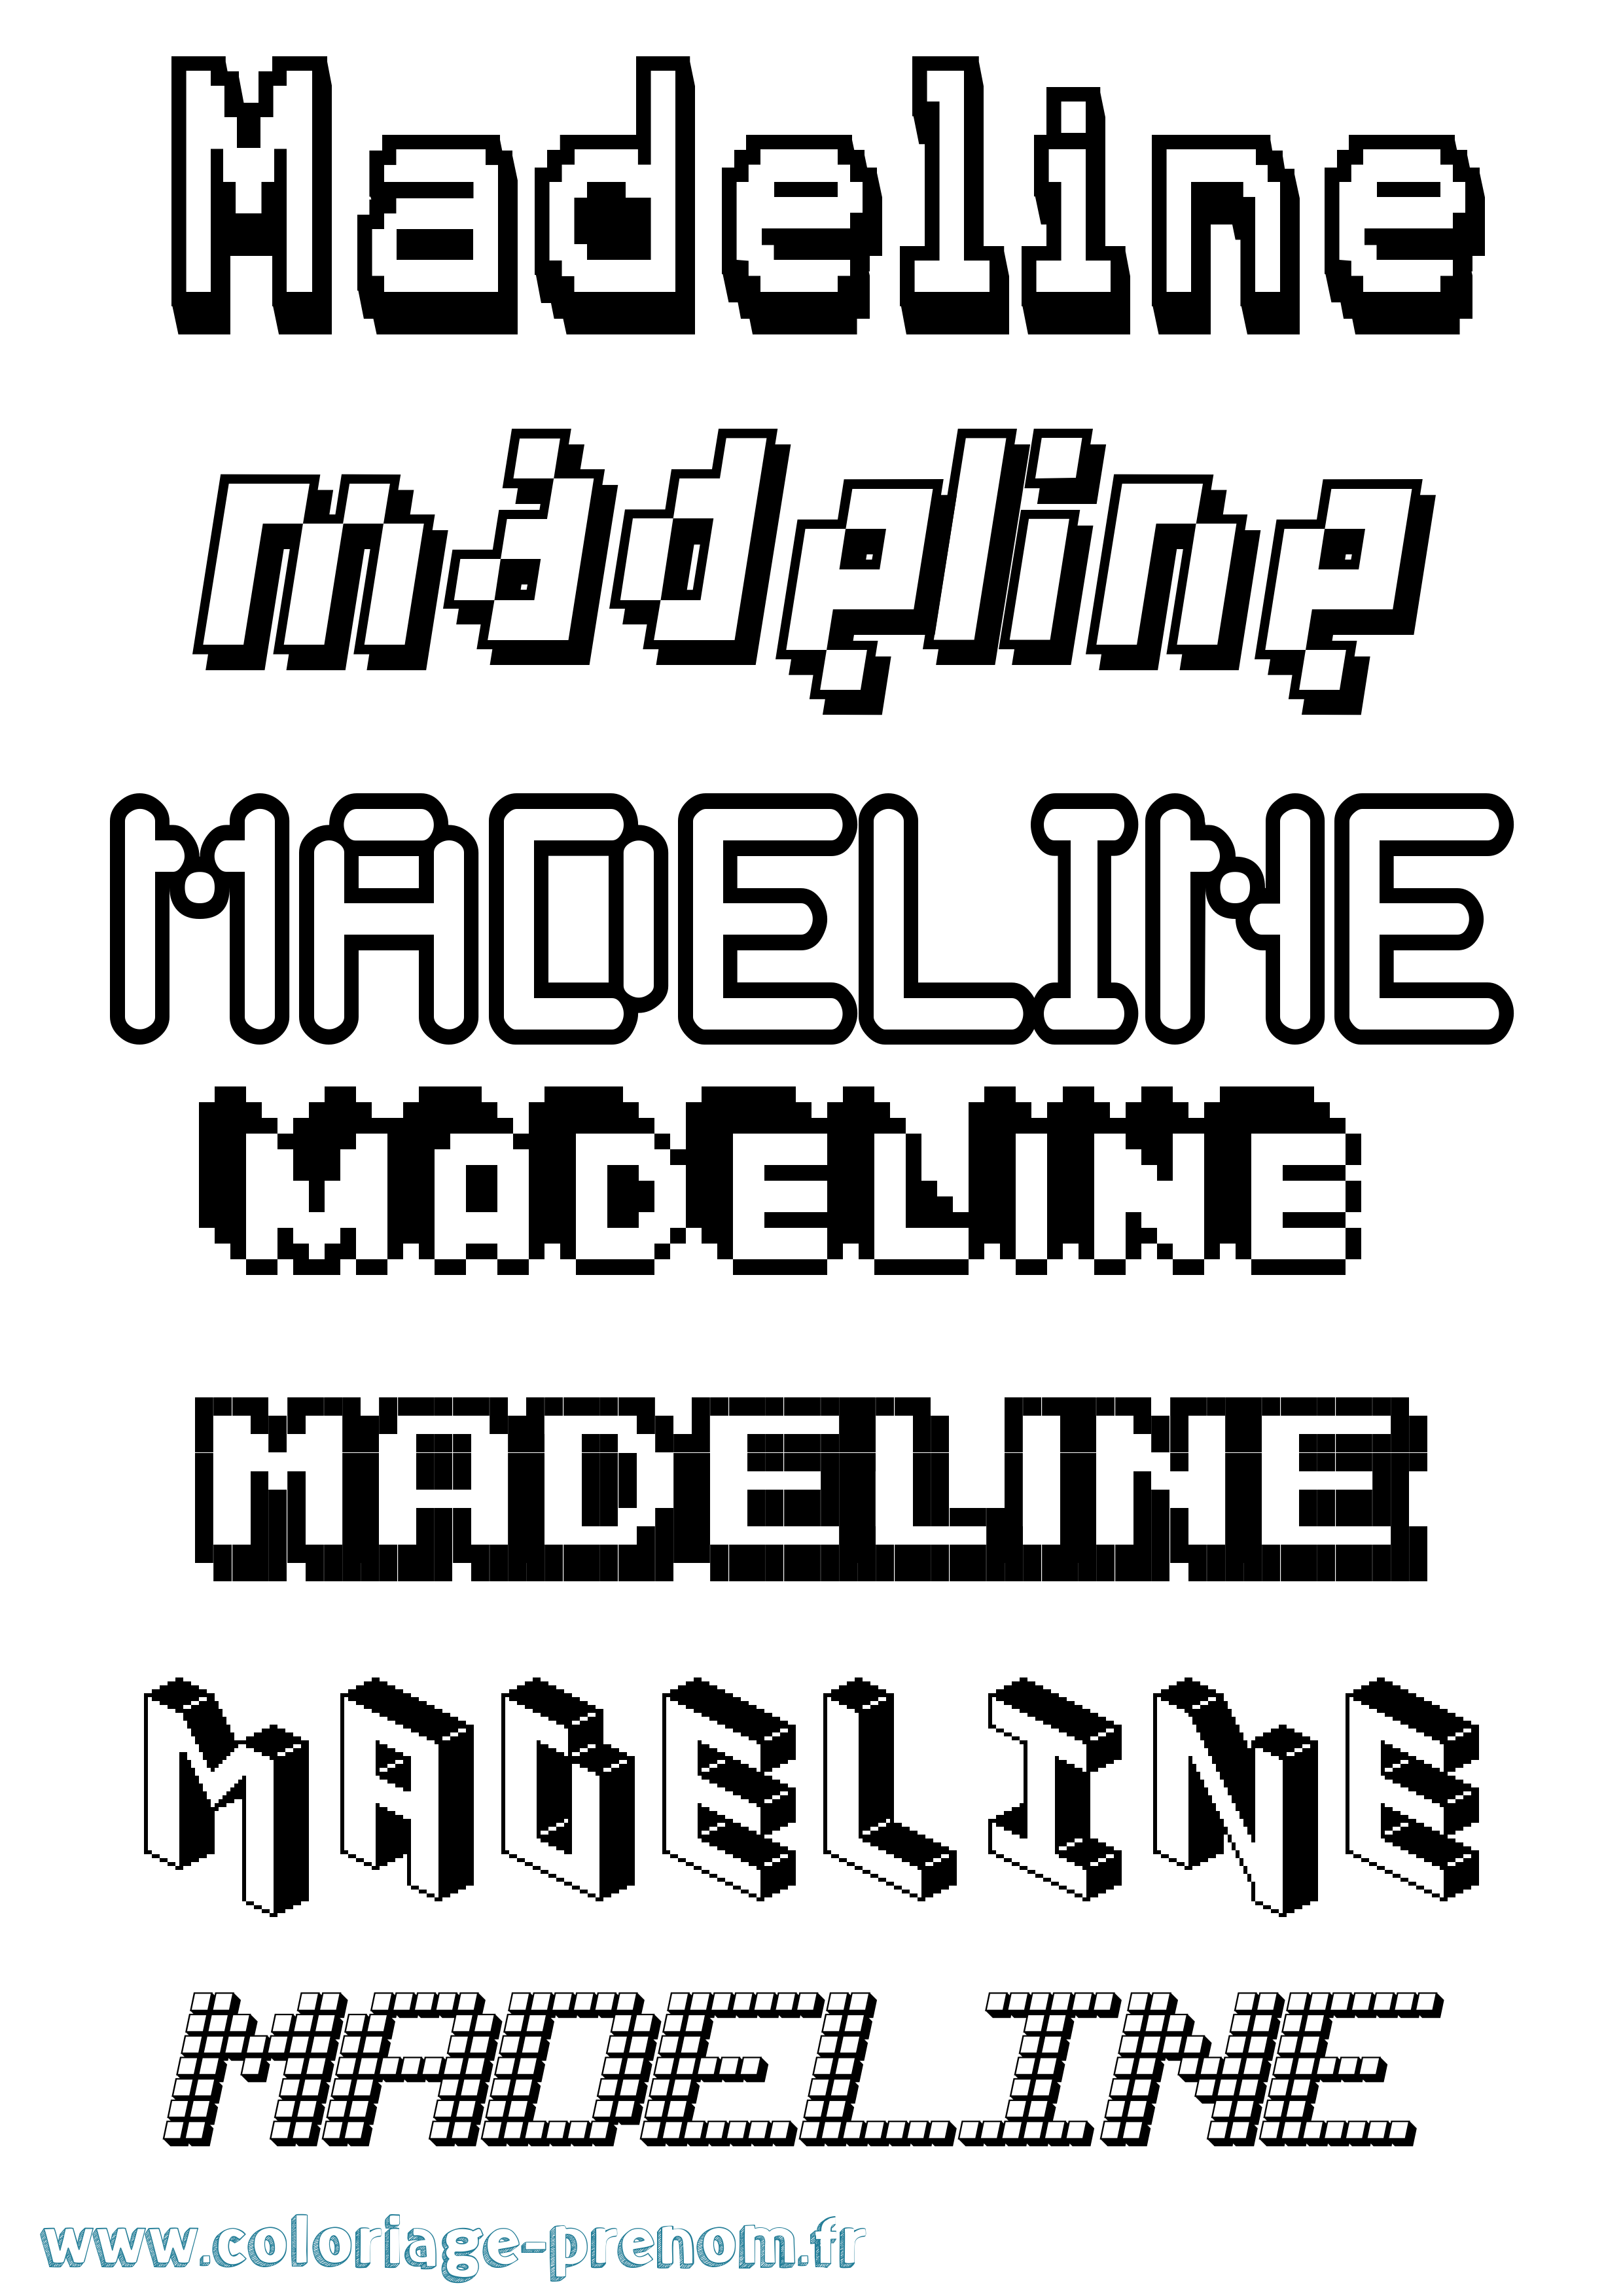 Coloriage prénom Madeline Pixel